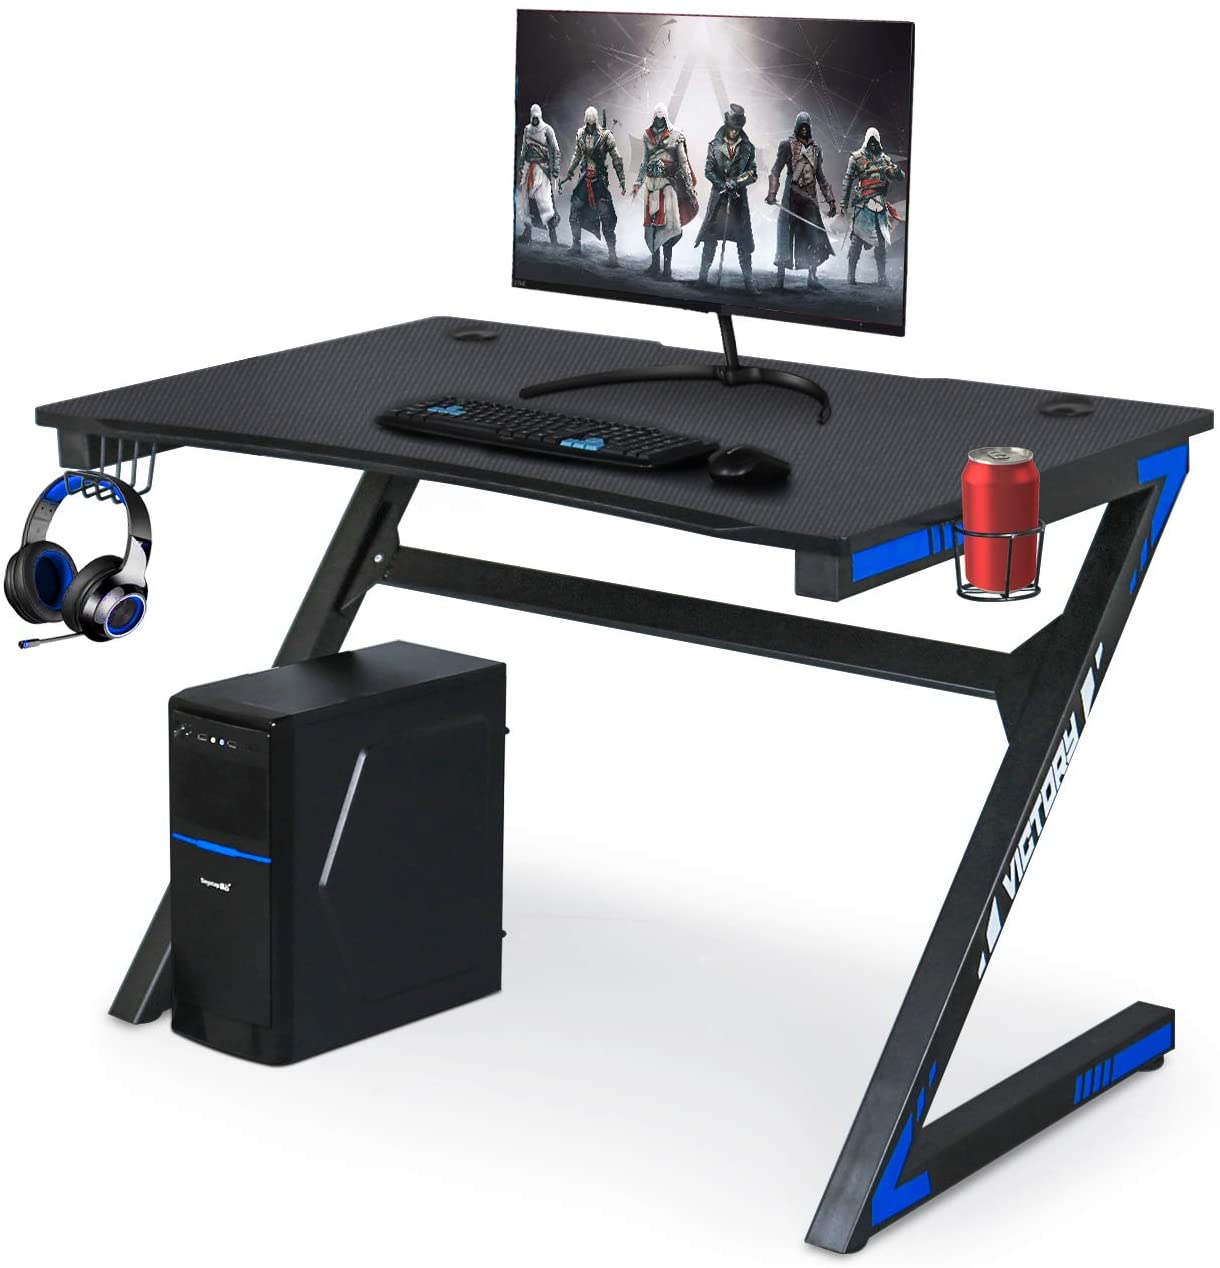 https://www.dontwasteyourmoney.com/wp-content/uploads/2020/05/yigobuy-cup-headphone-holder-carbon-fiber-computer-gaming-desk-gaming-desk.jpg